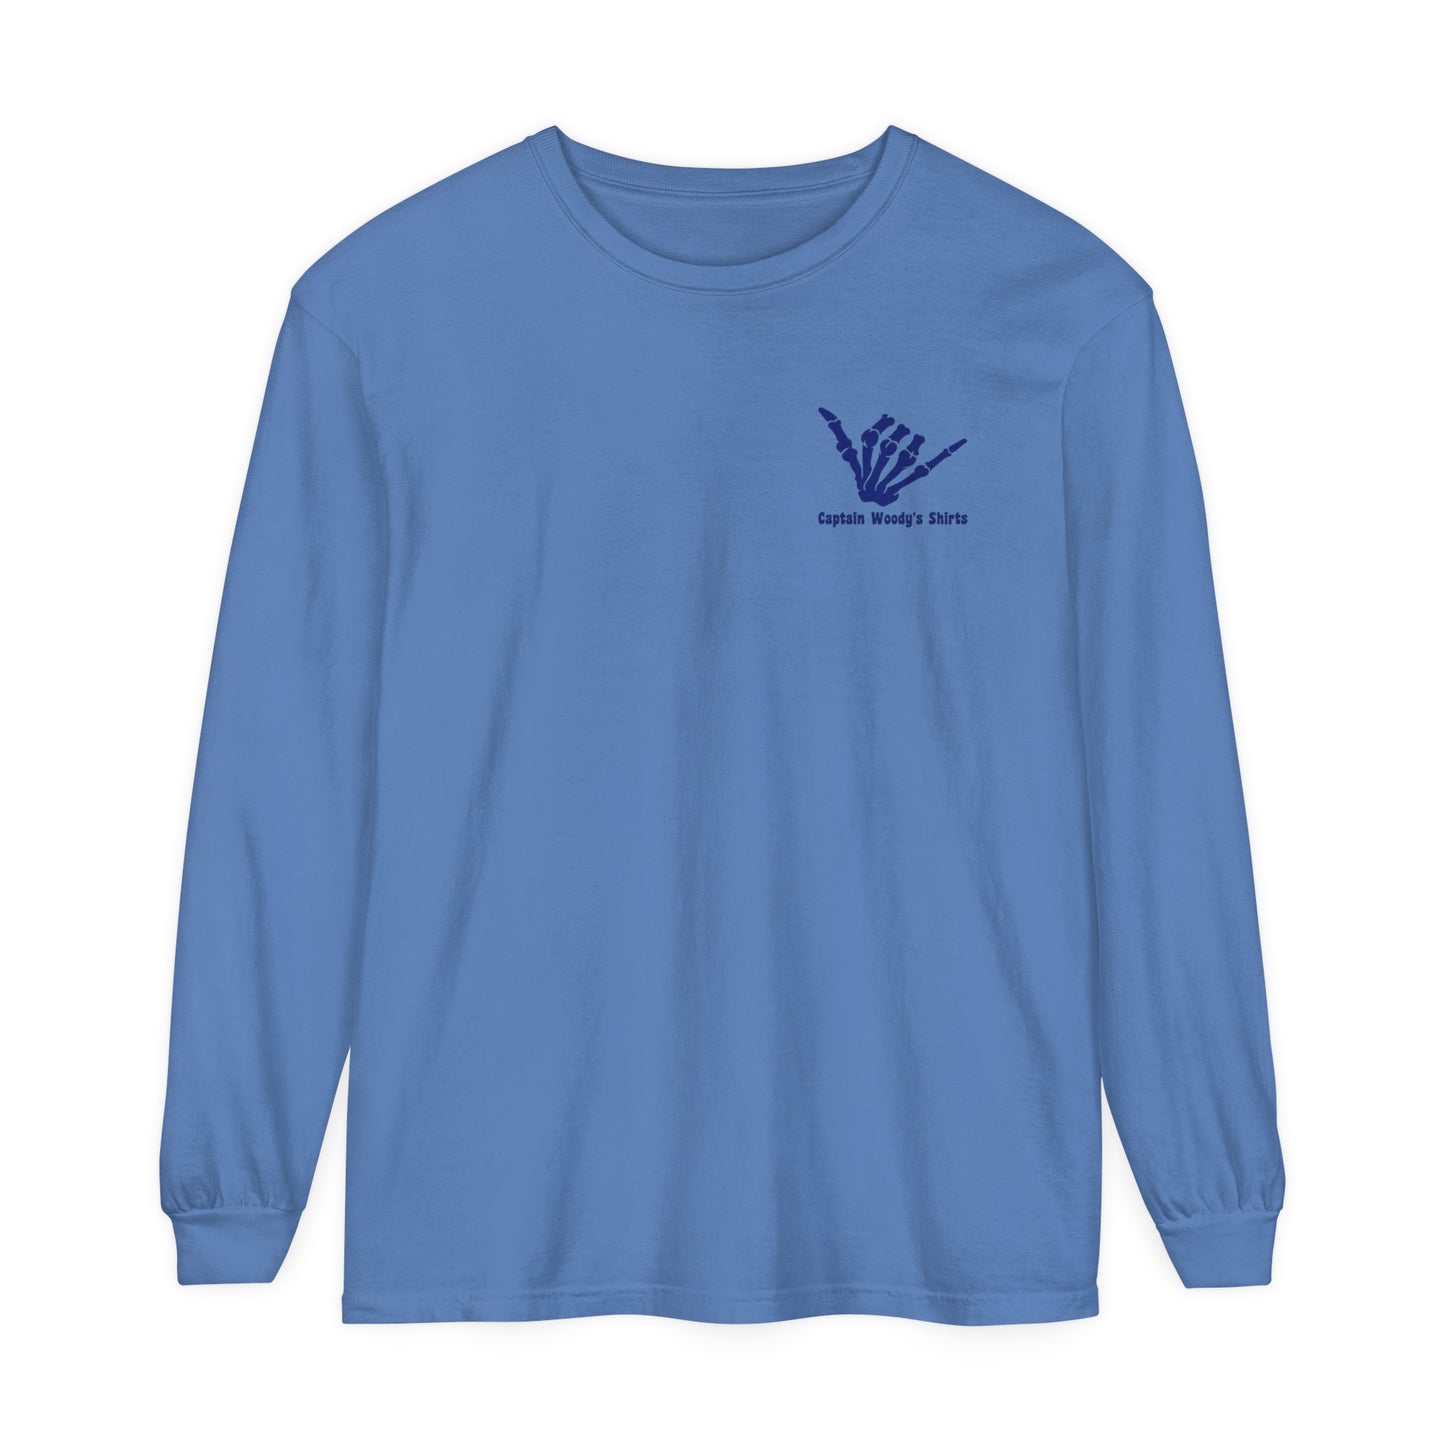 Get Wet Unisex Long Sleeve Comfort Colors T-Shirt